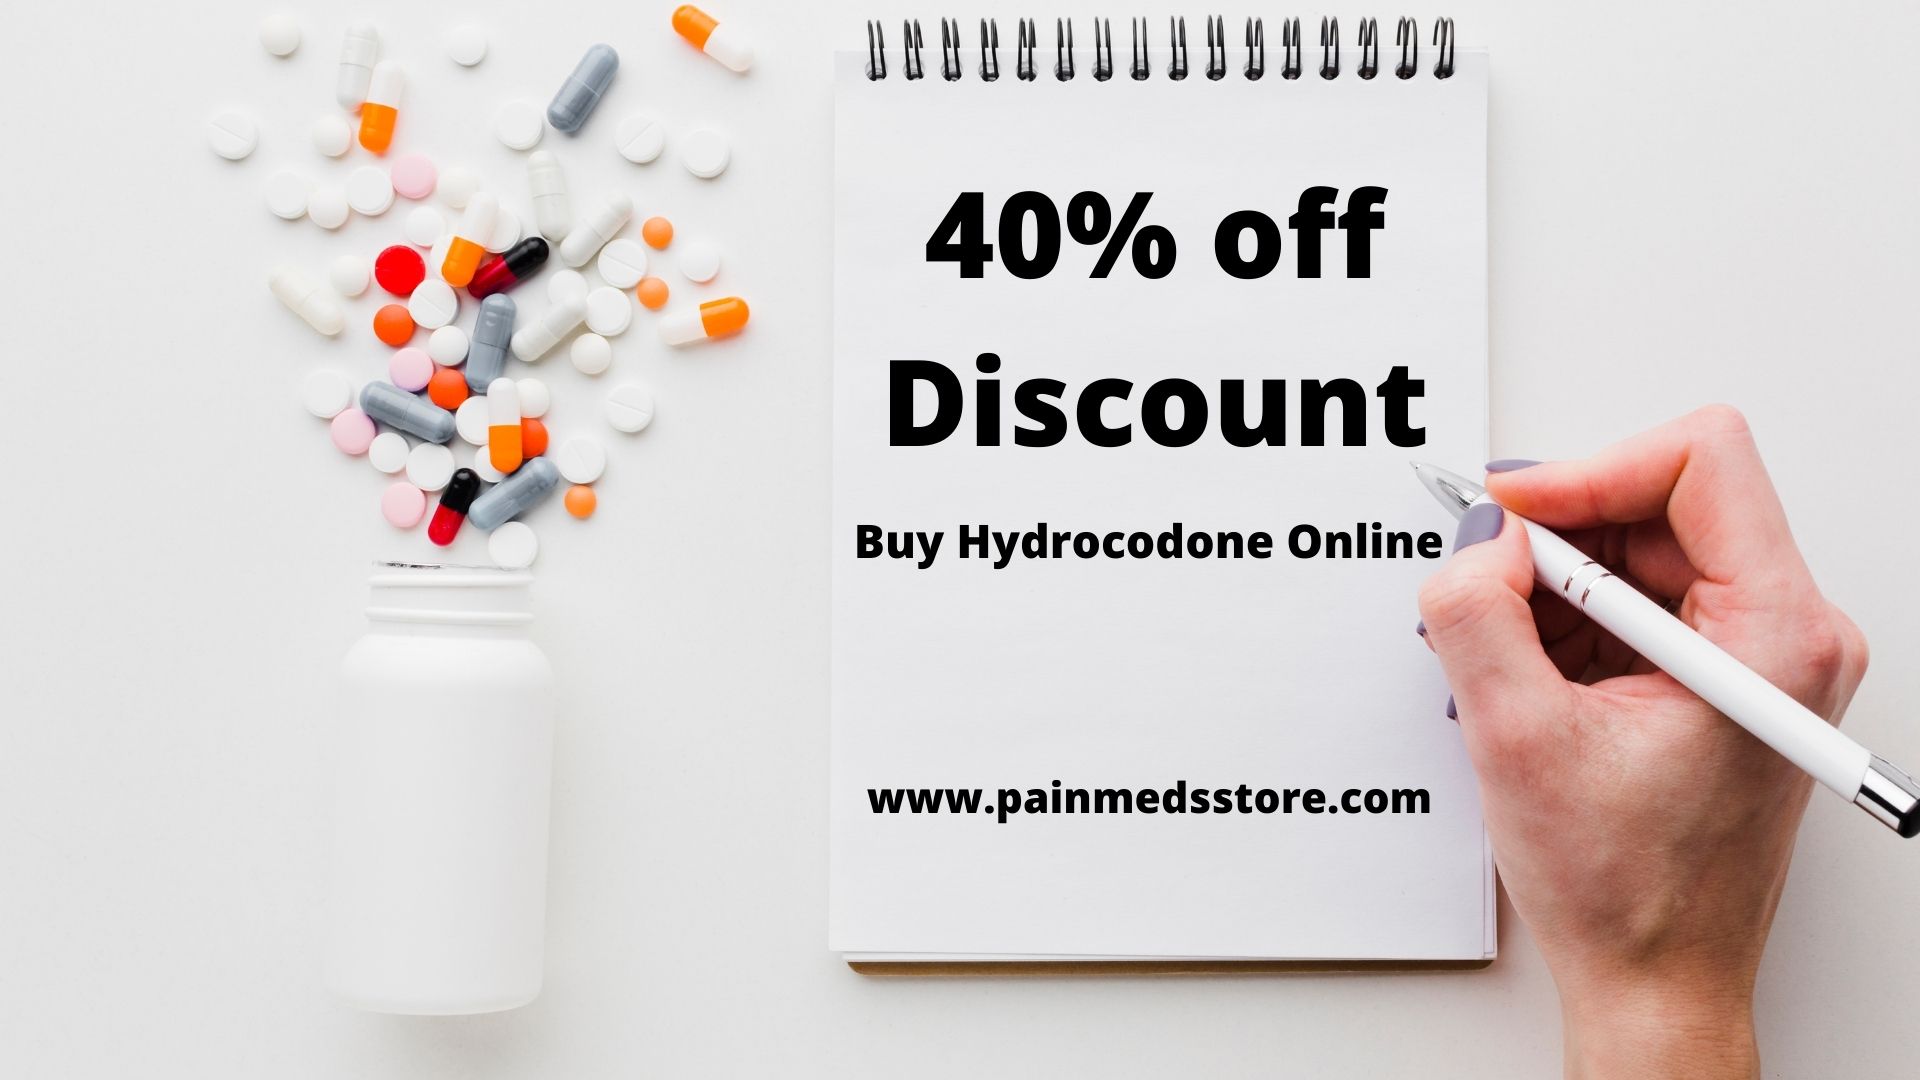 buy hydrocodone oxycodone percocet from www.painmedsstor.com